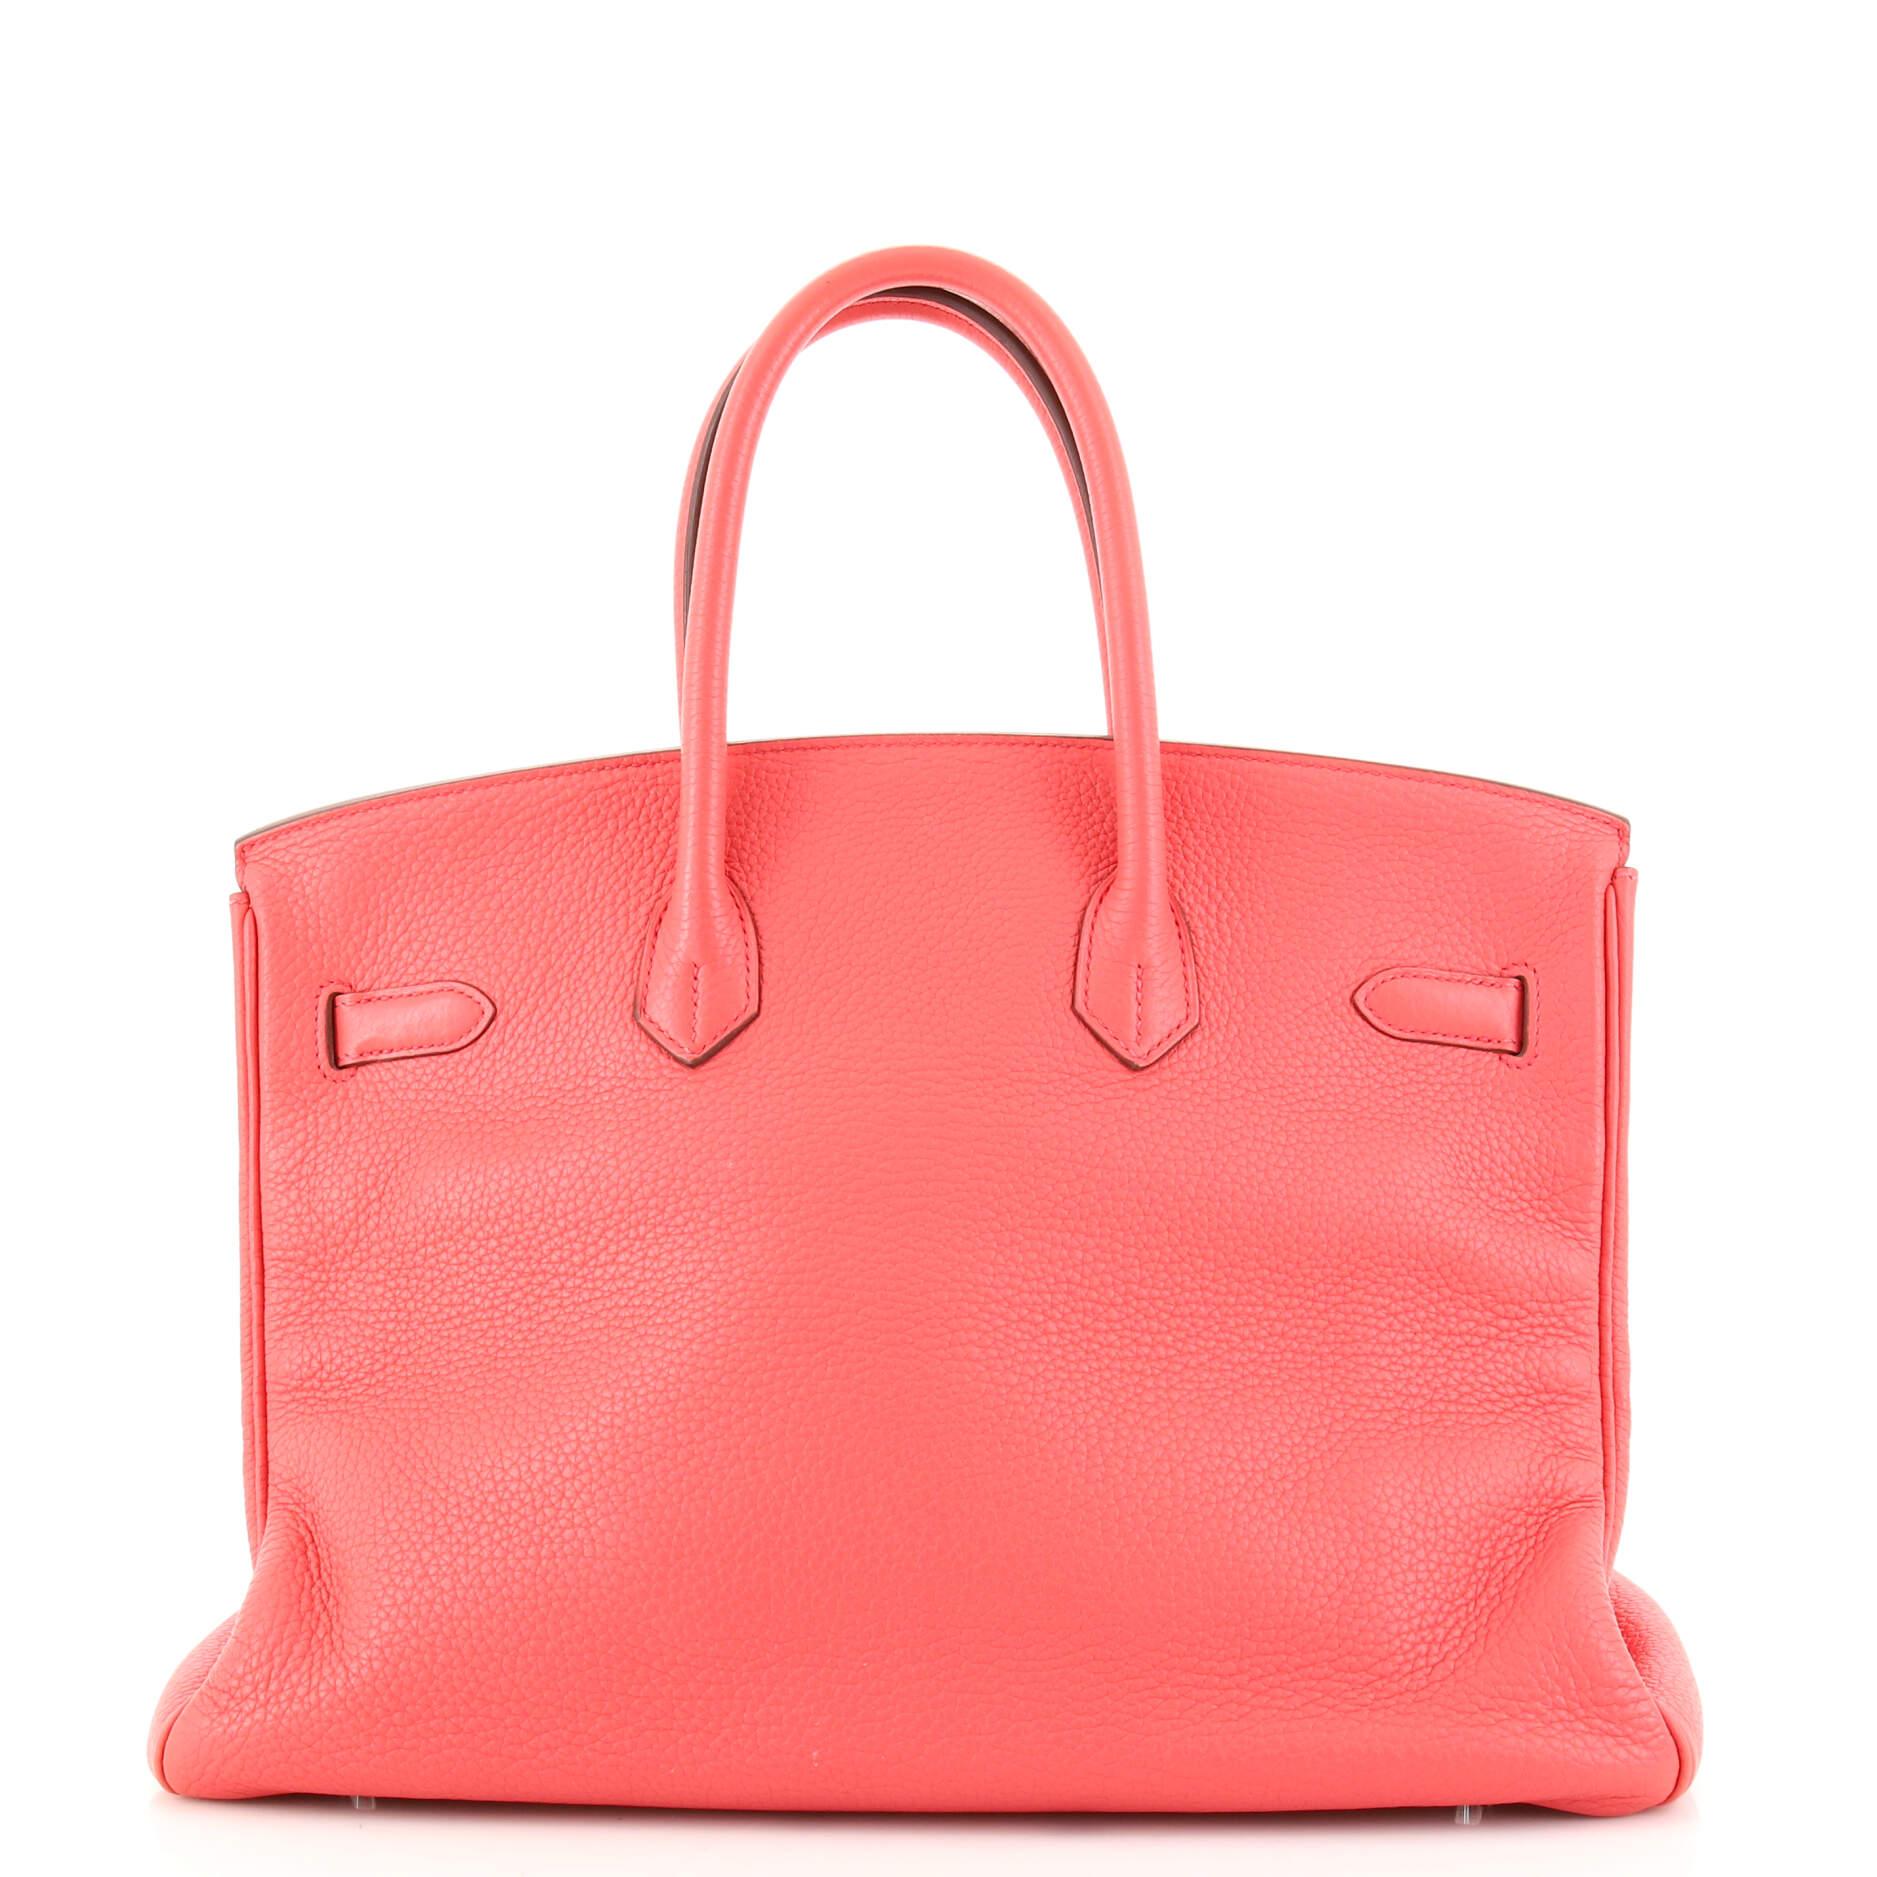 Pink Hermes Birkin Handbag Bougainvillea Clemence with Palladium Hardware 35